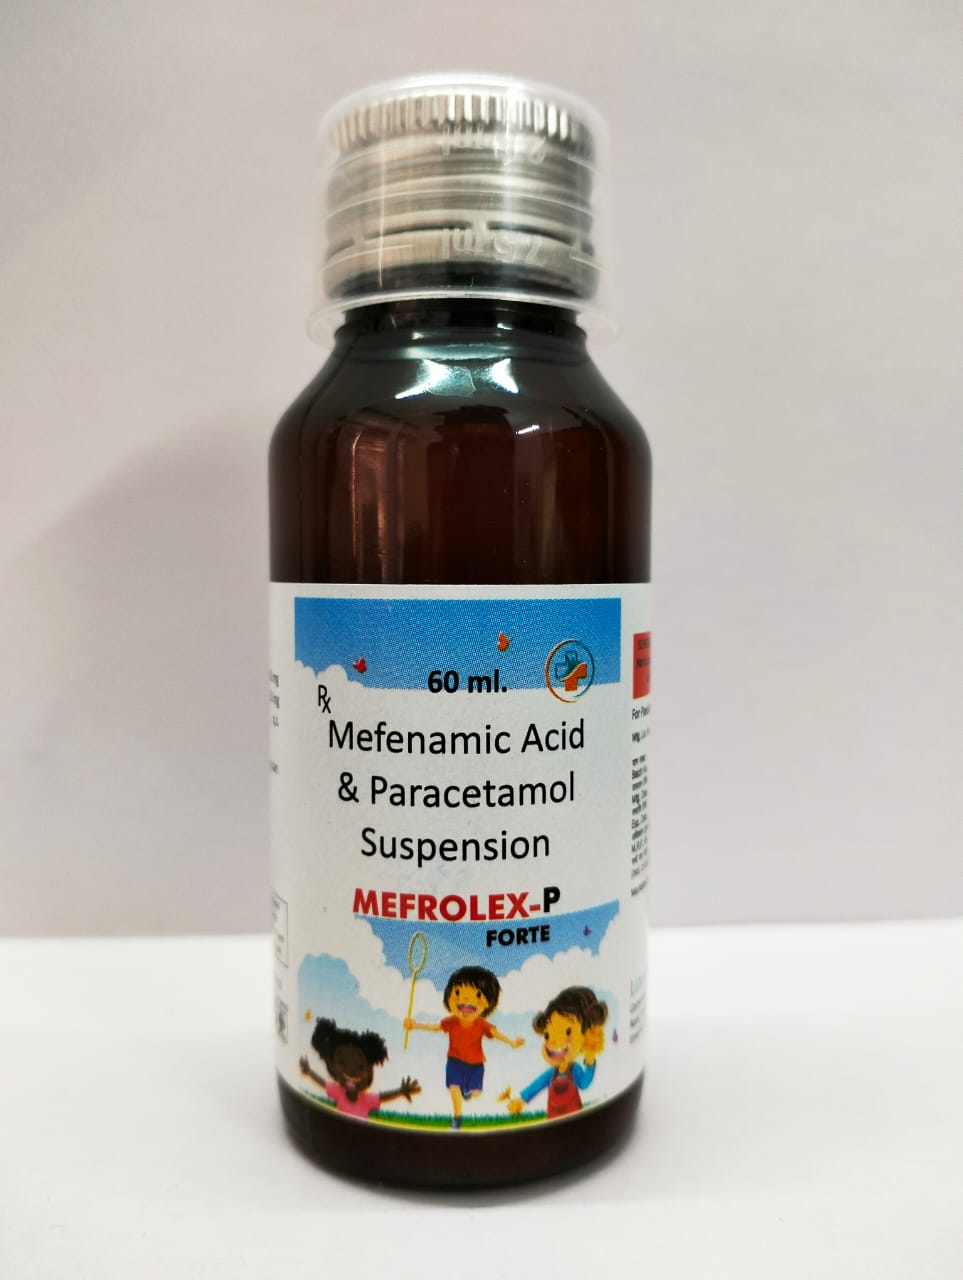 mefenamic acid 100 mg + paracetamol 250
mg